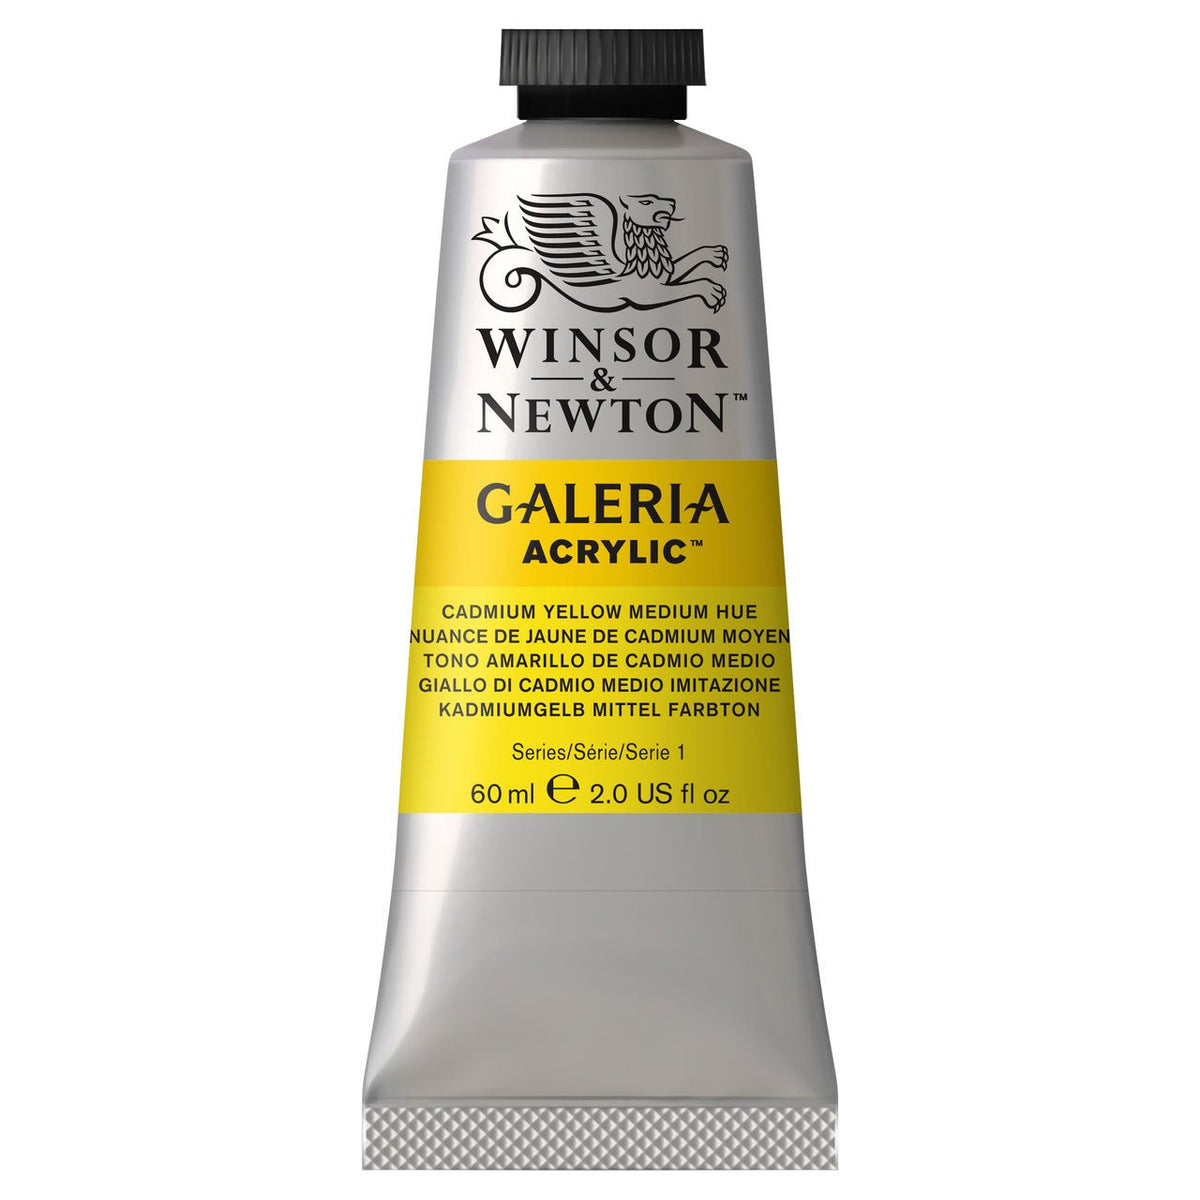 Winsor & Newton Galeria Acrylic Cadmium Yellow Medium Hue 60 ml - merriartist.com